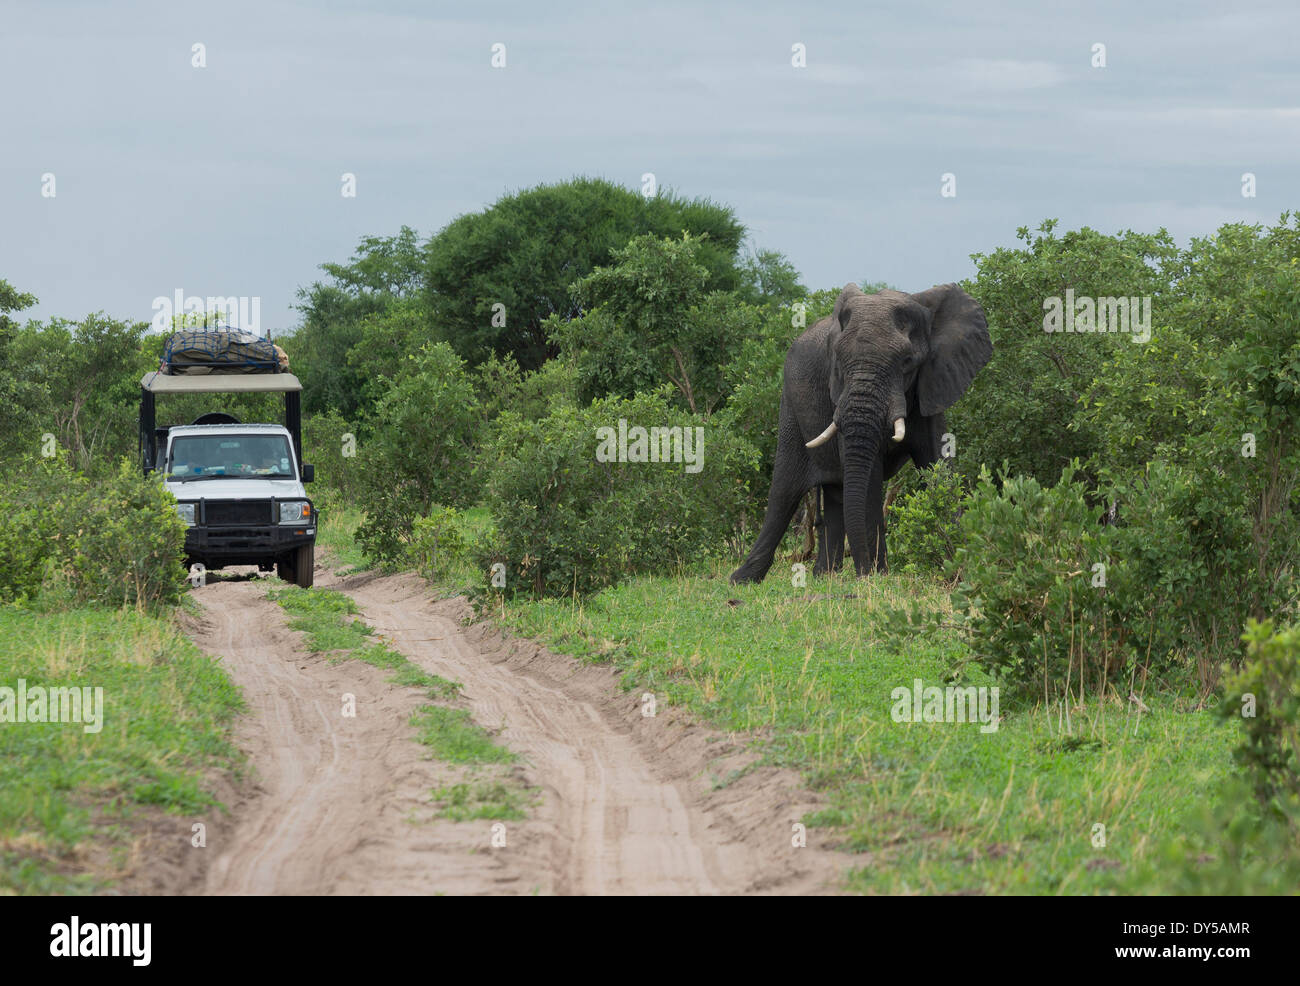 African elephant (Loxodonta africana) near safari jeep Stock Photo